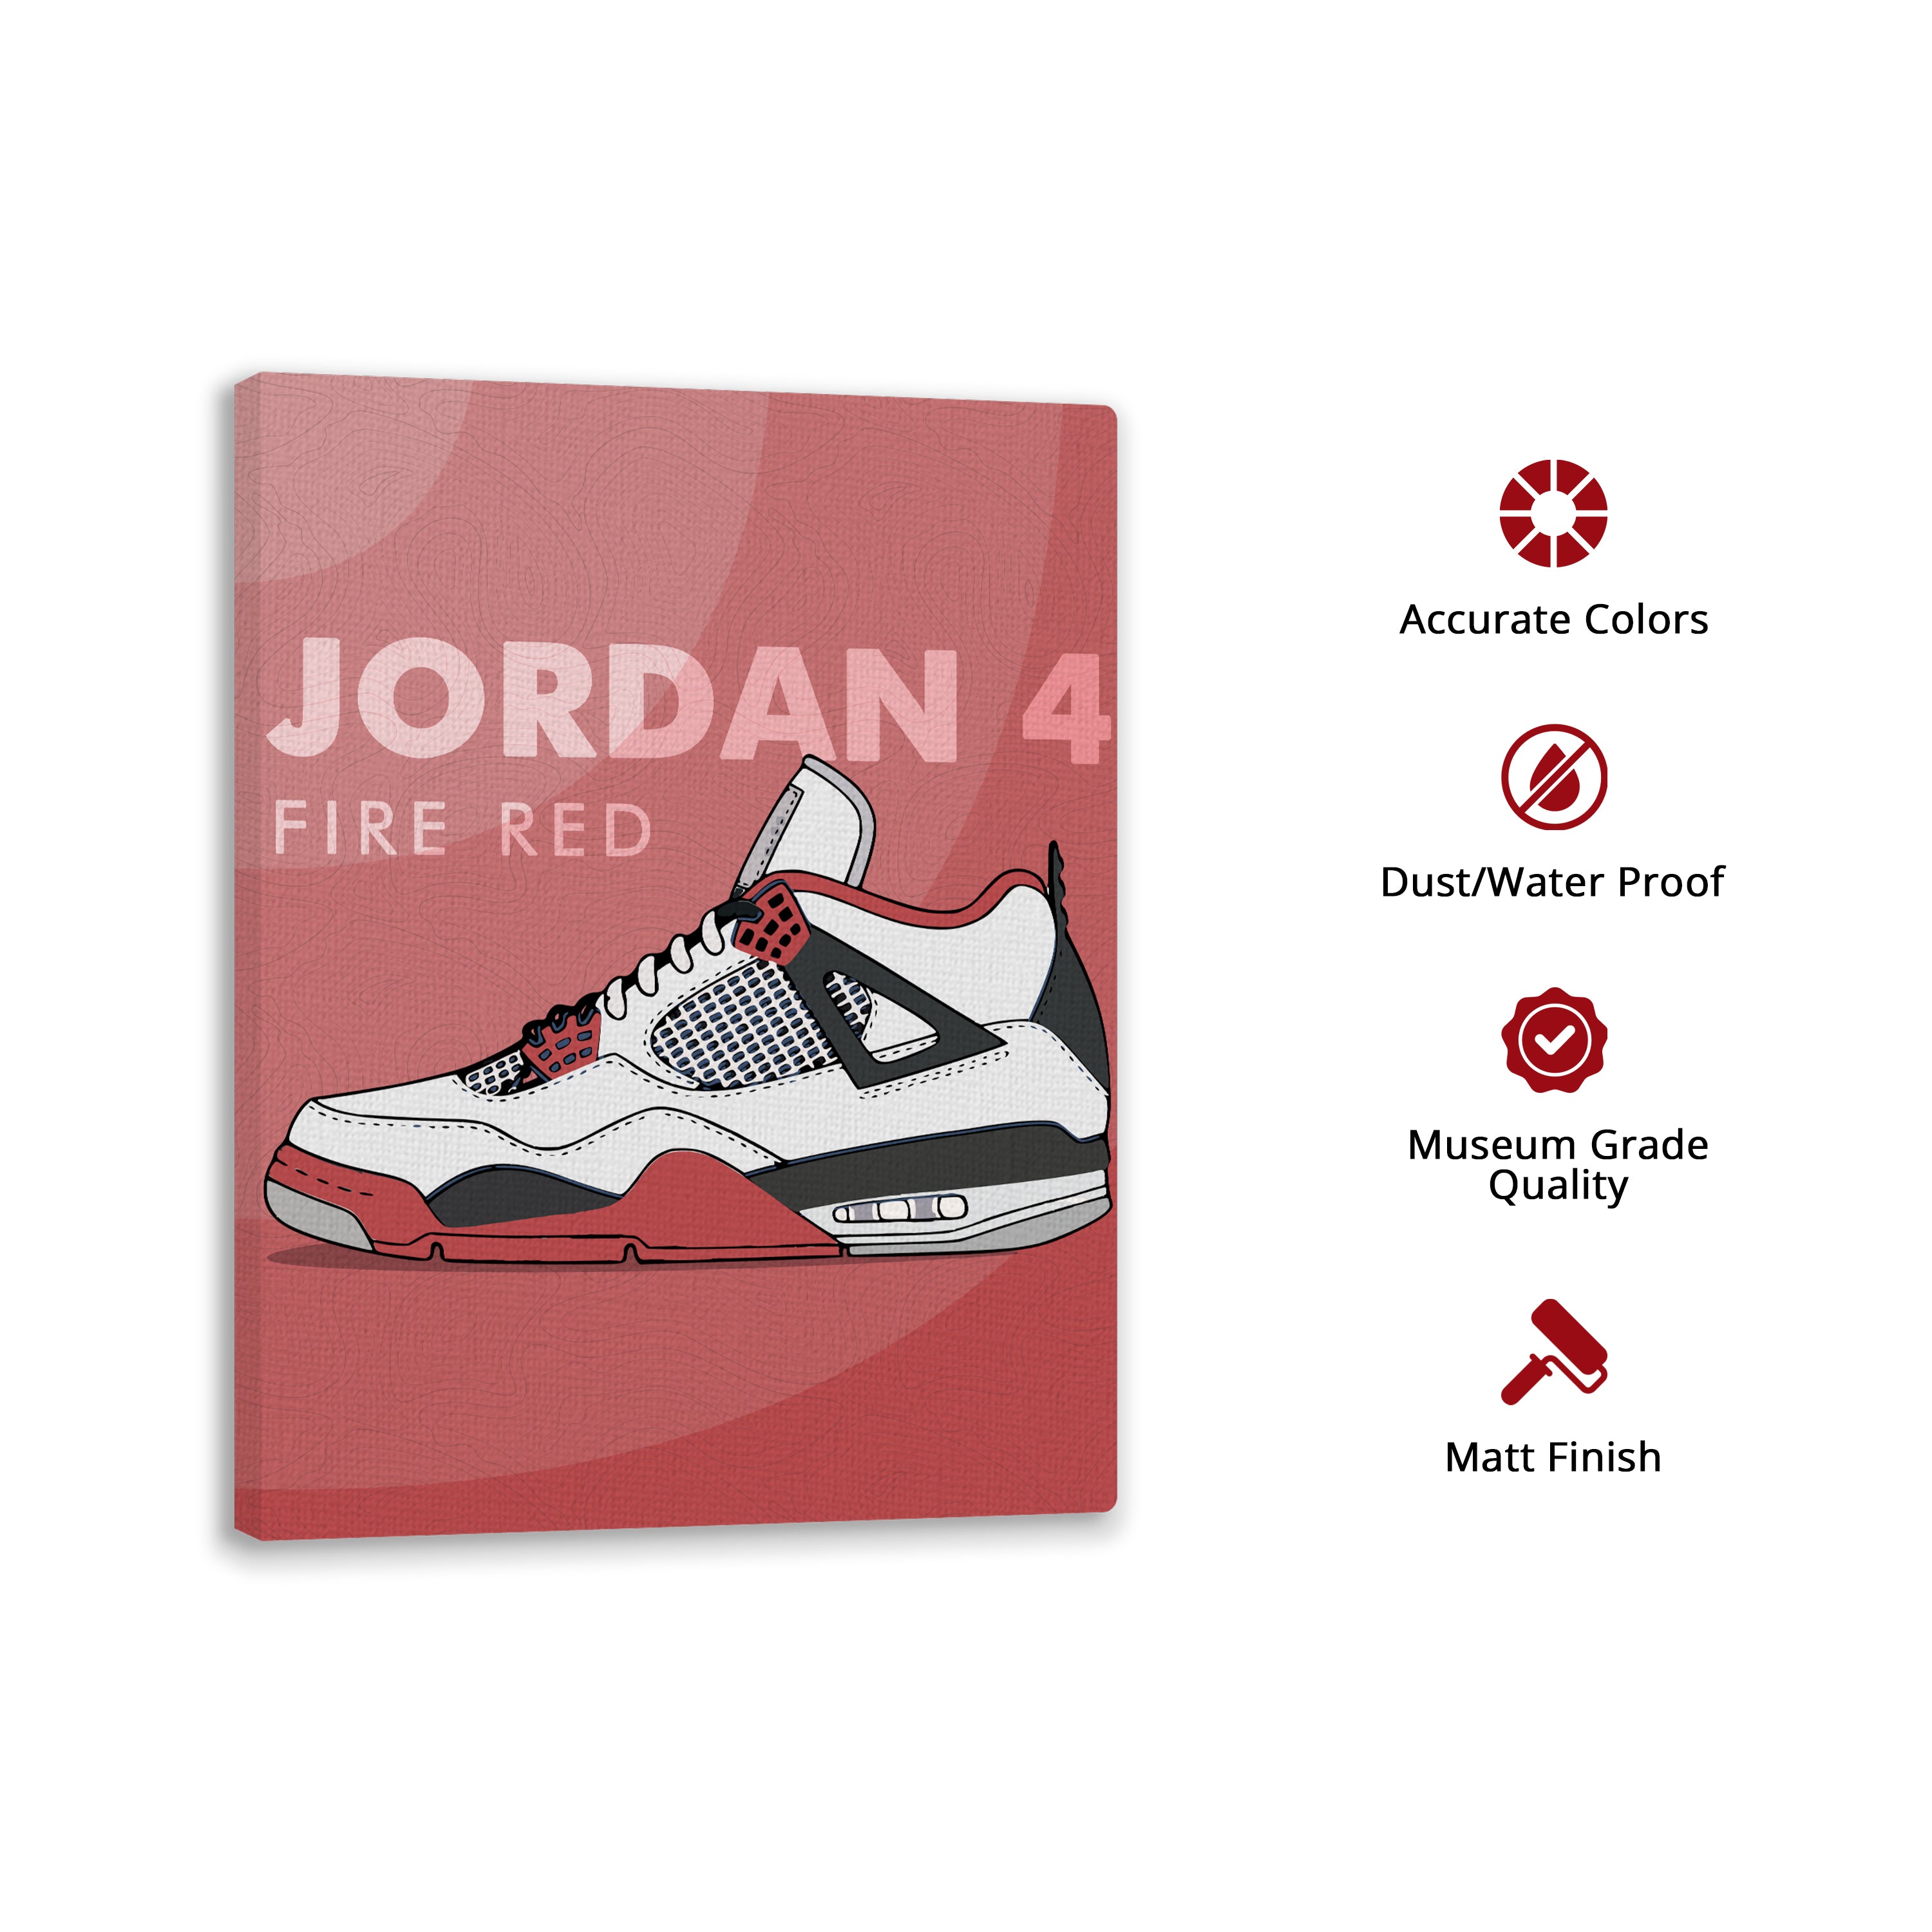 Air Jordan 4 - Fire Red